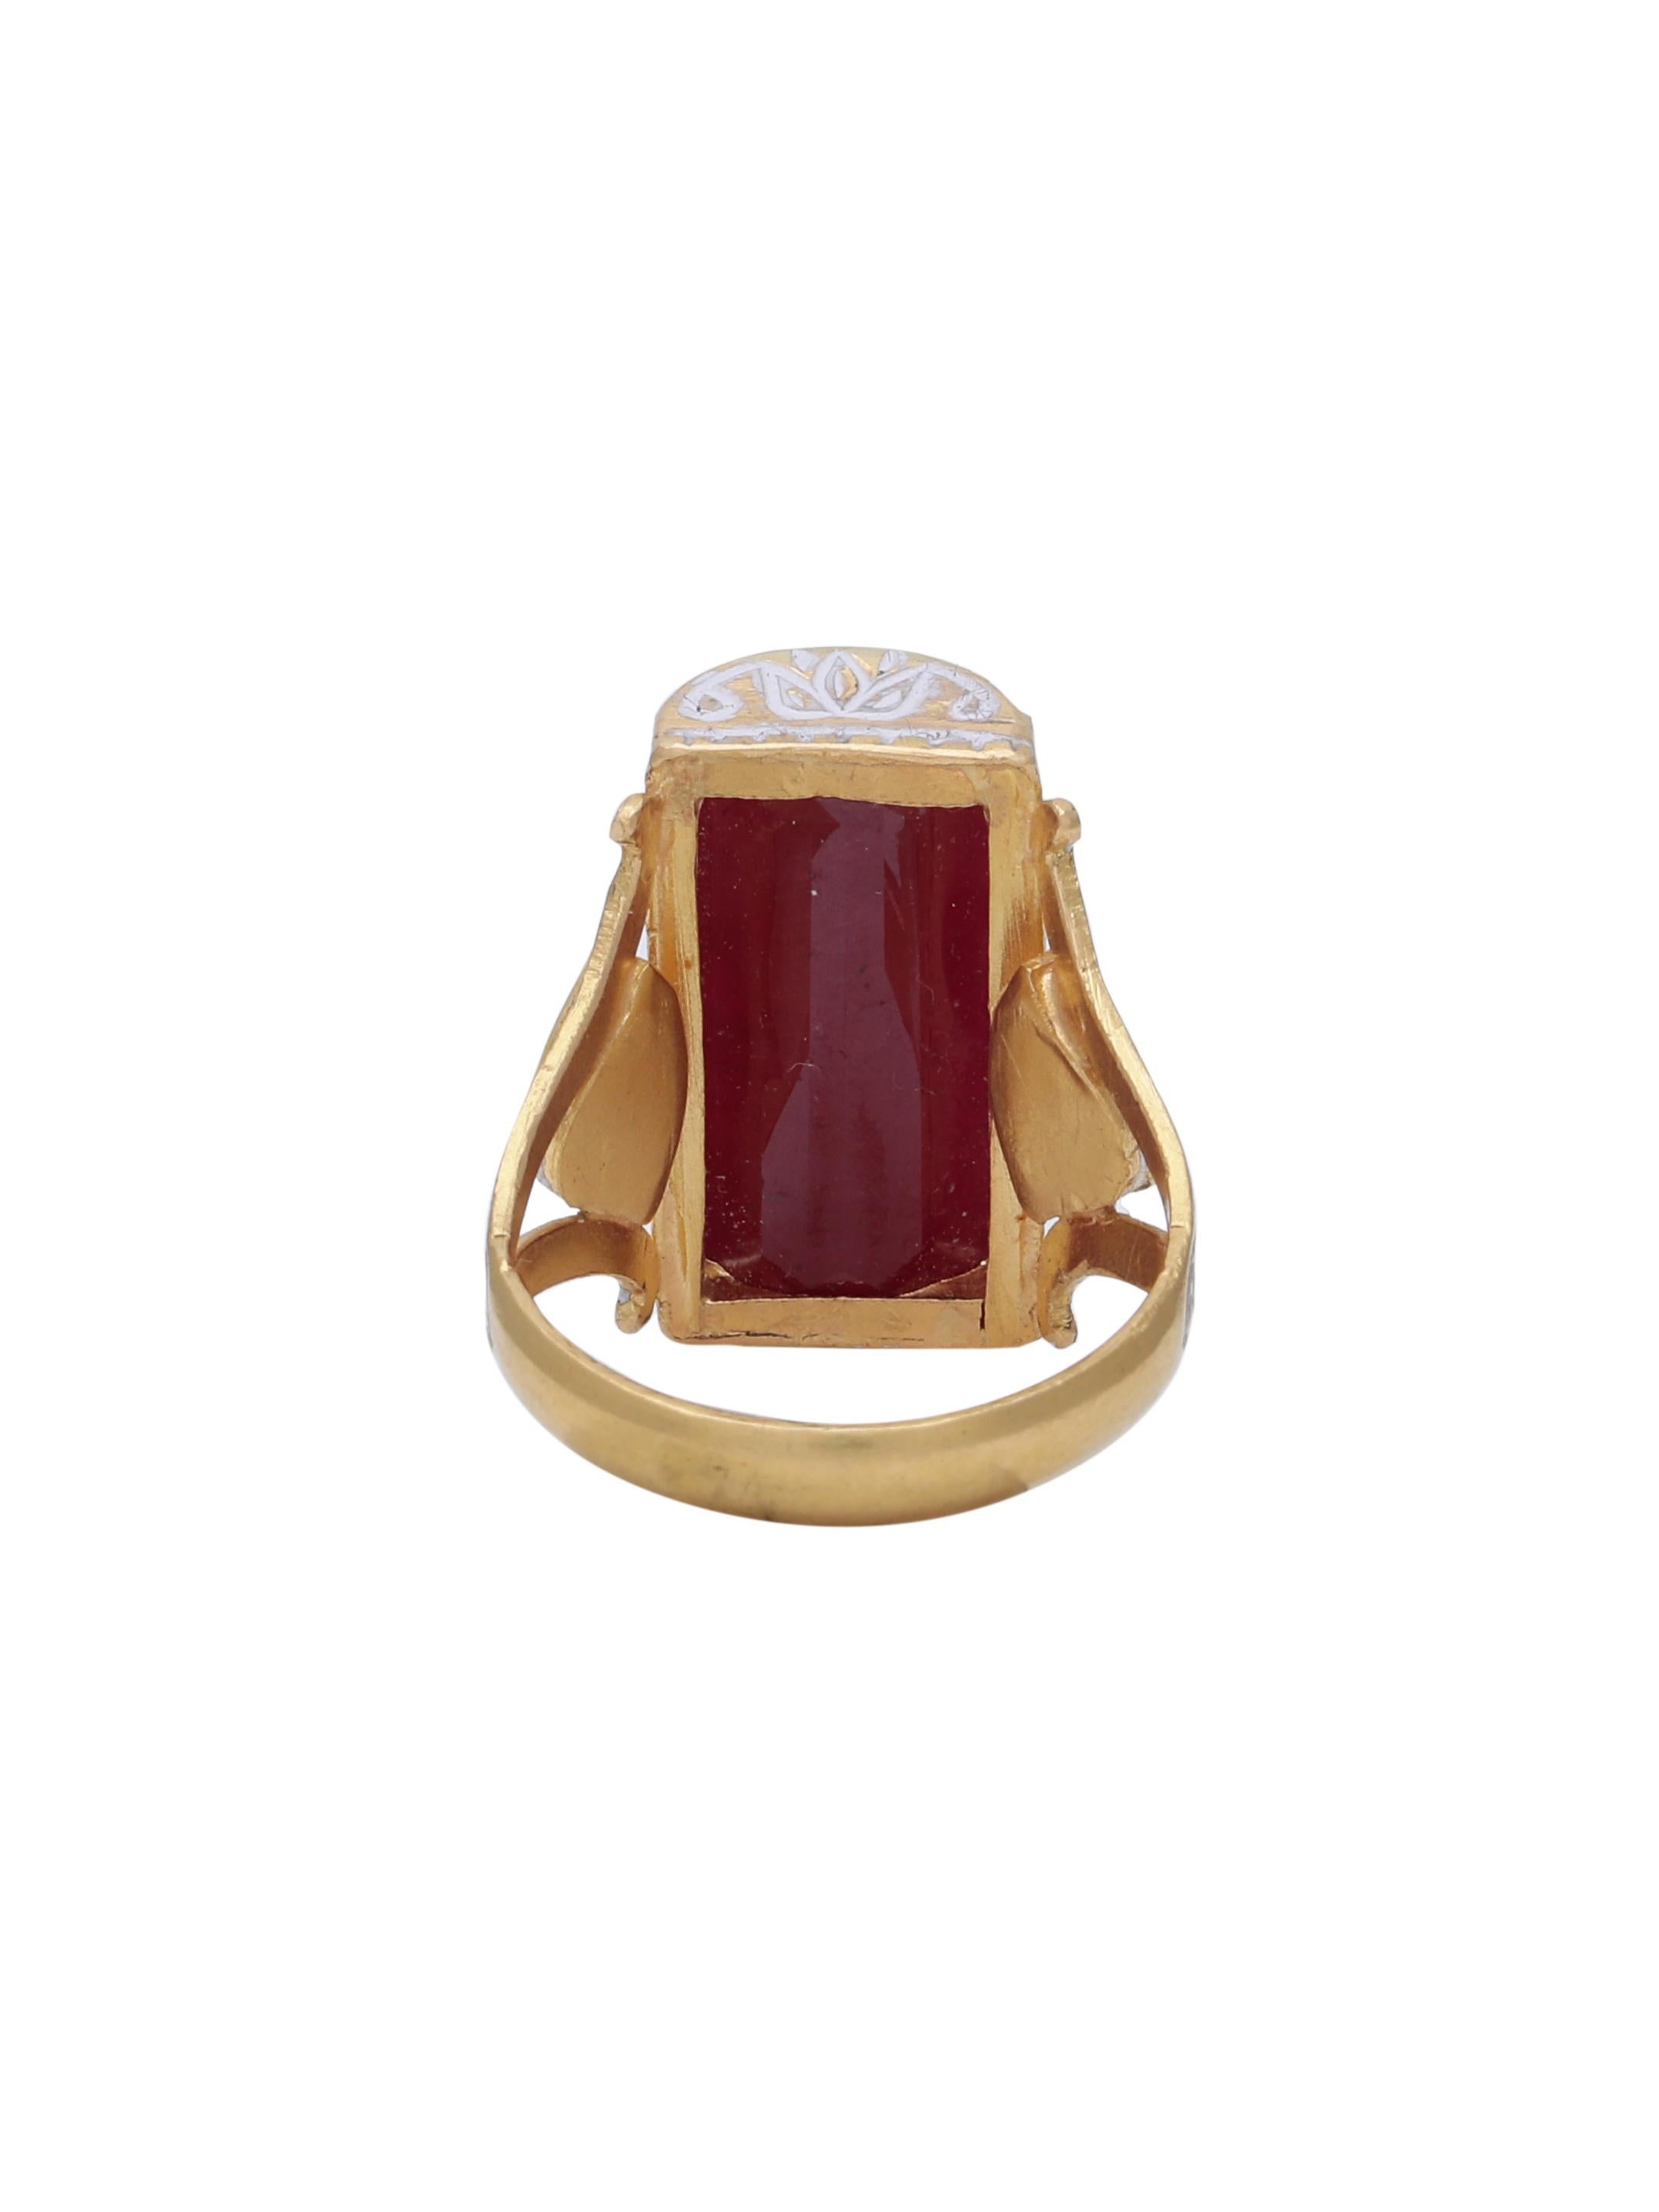 Emerald Cut Ruby and Diamond 18 Karat Gold Ring with Enamel